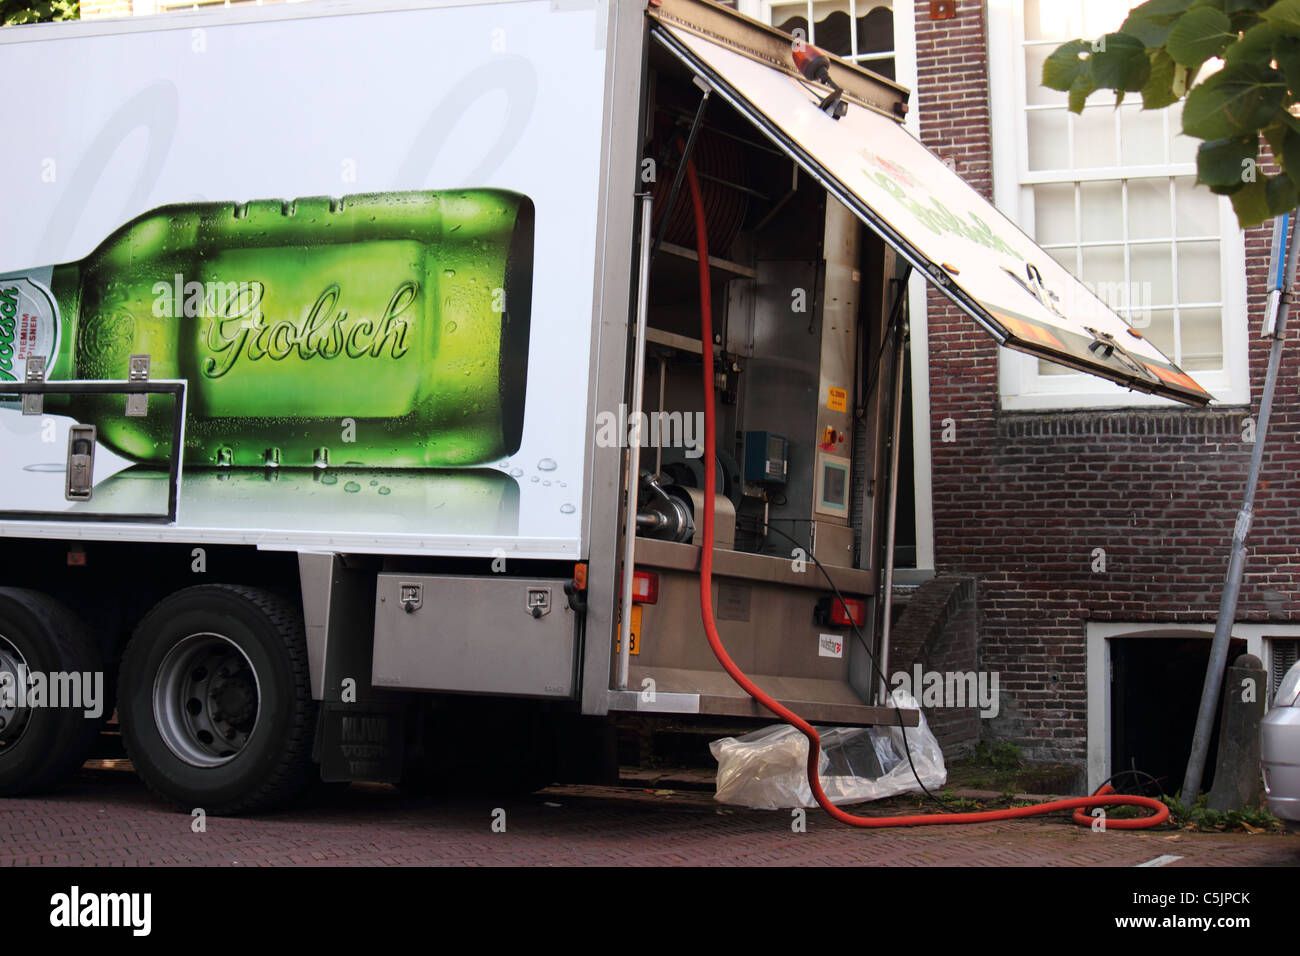 A Grolsch beer truck delivering beer in The Netherlands Stock Photo